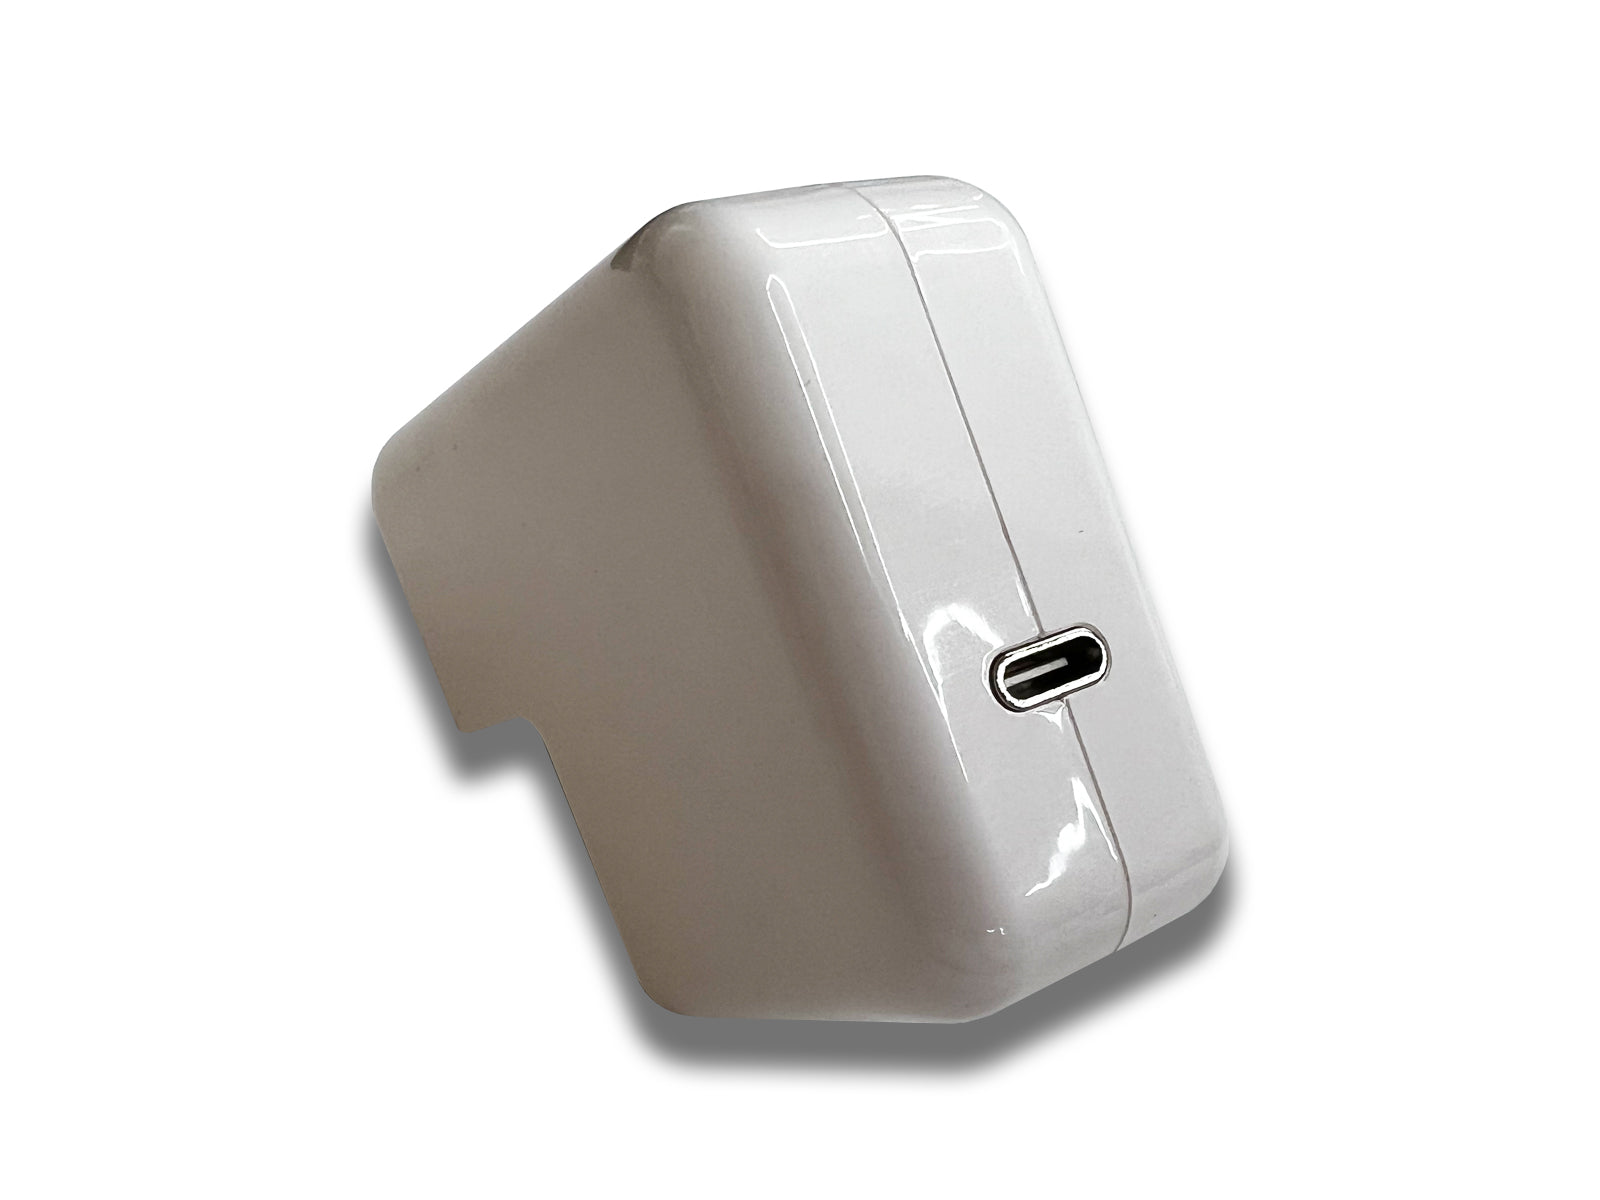 MacBook Air Charger USB-C Port